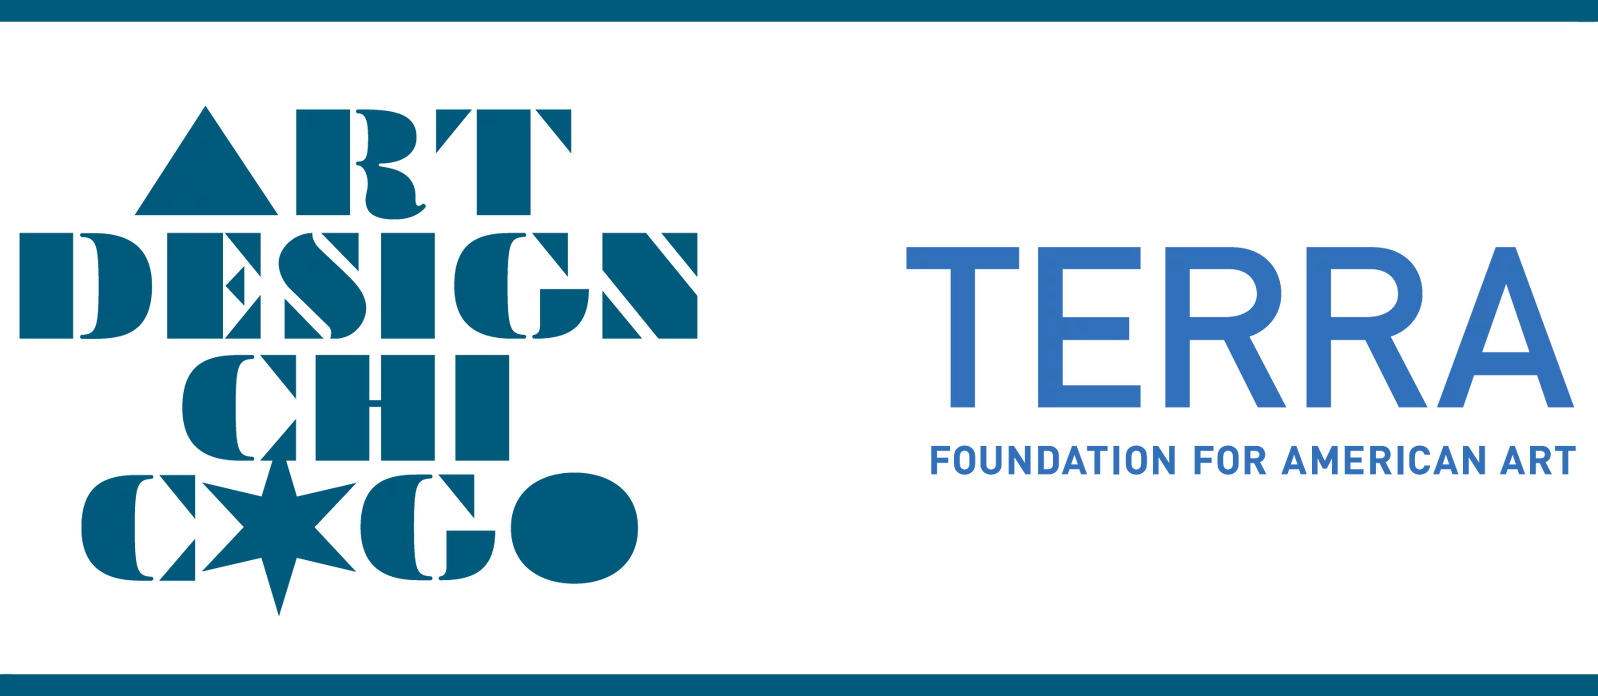 Art Design Chicago logo with Terra Foundation for American Art logo